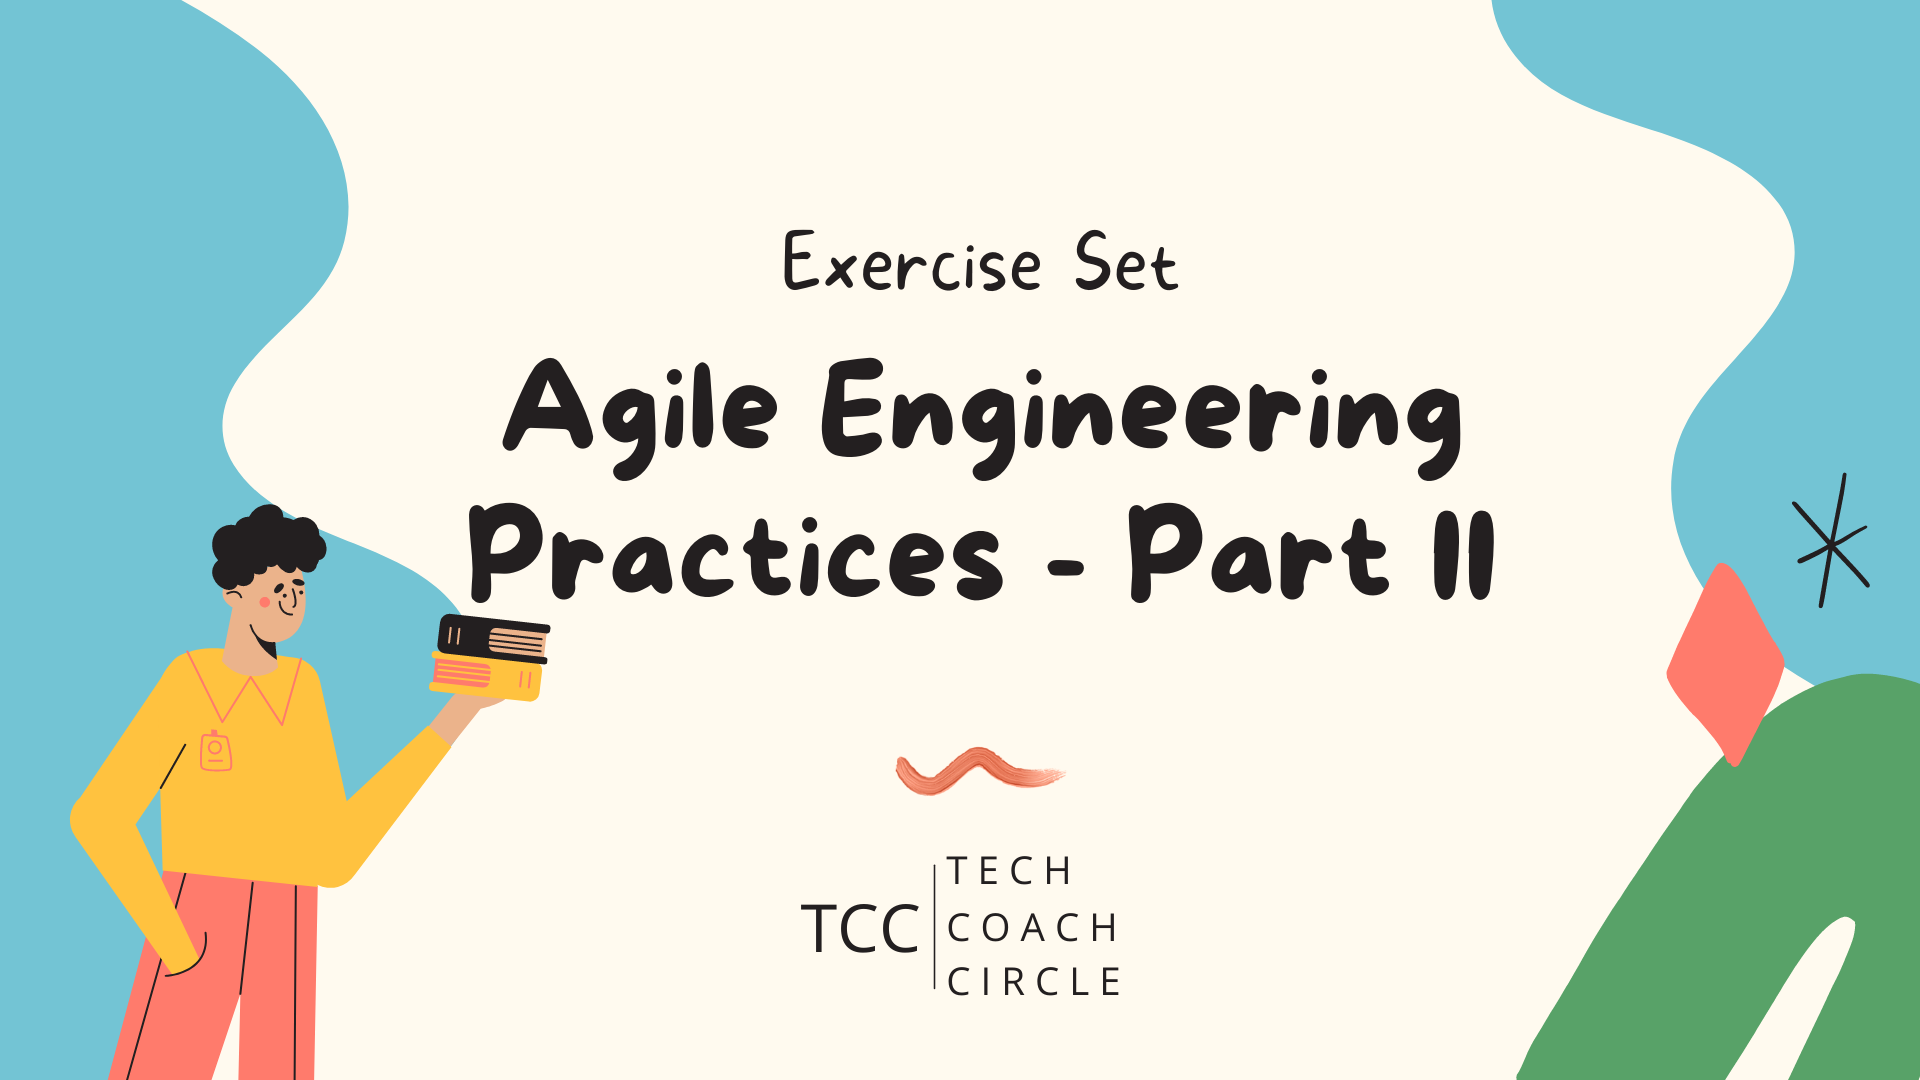 Agile Engineering Practices - Part II